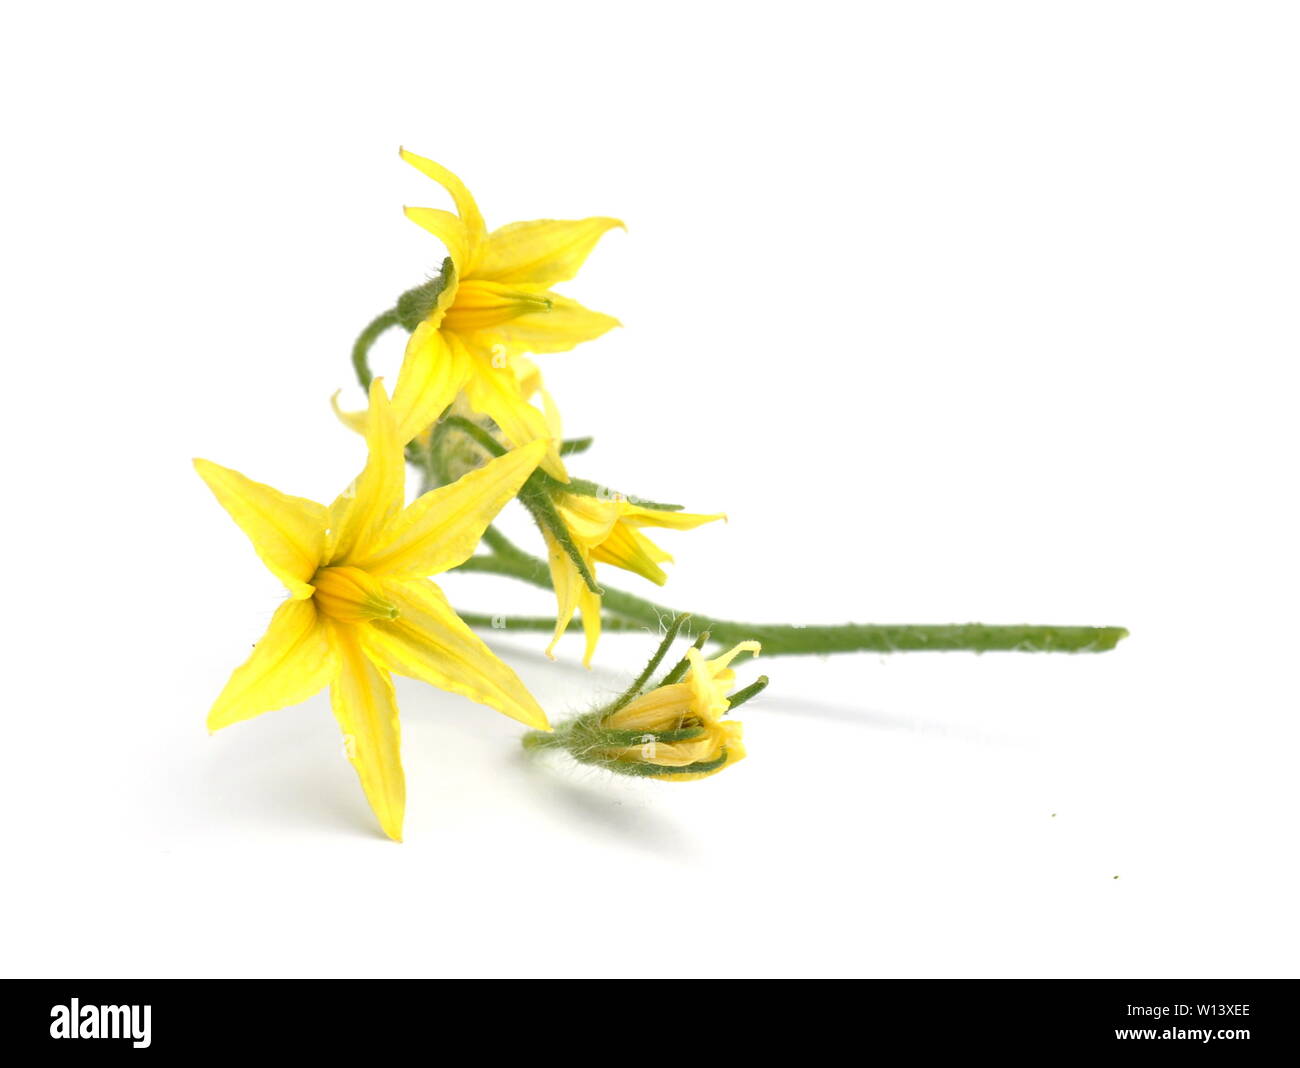 Yellow flower of a tomato plant on white background Stock Photo